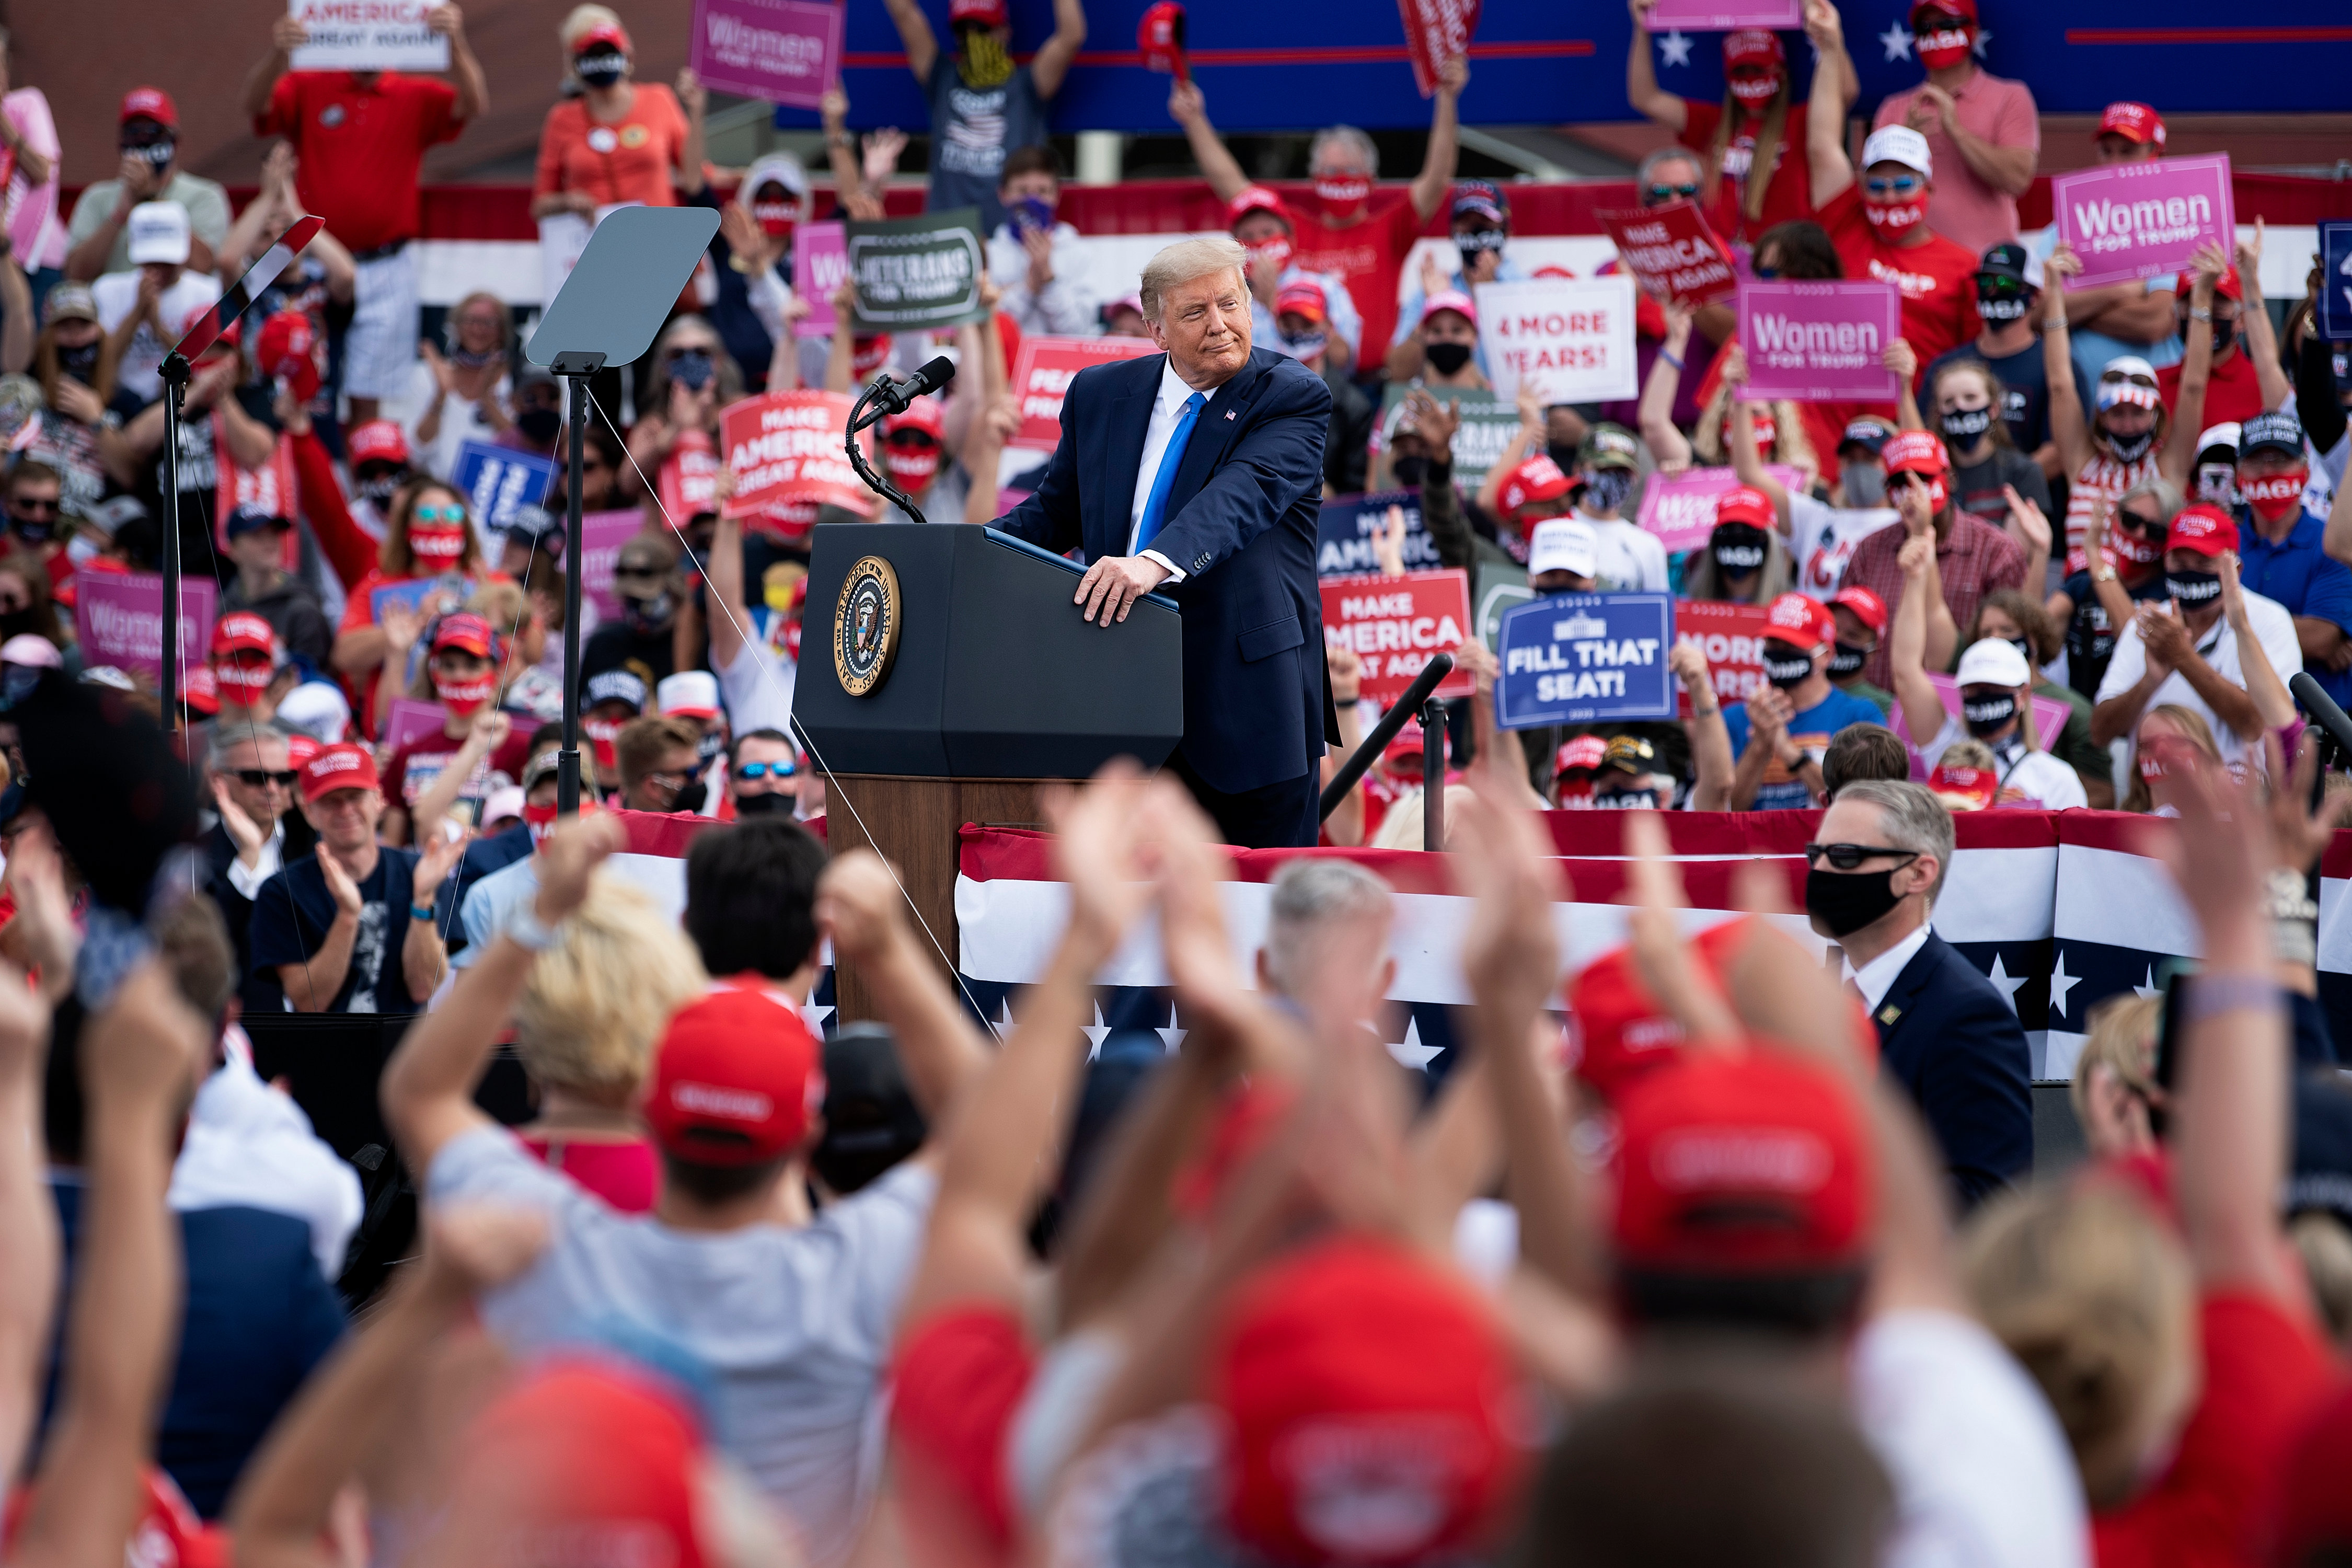 Trump’s North Carolina Rally Attendance Greenville Crowd Size Photos